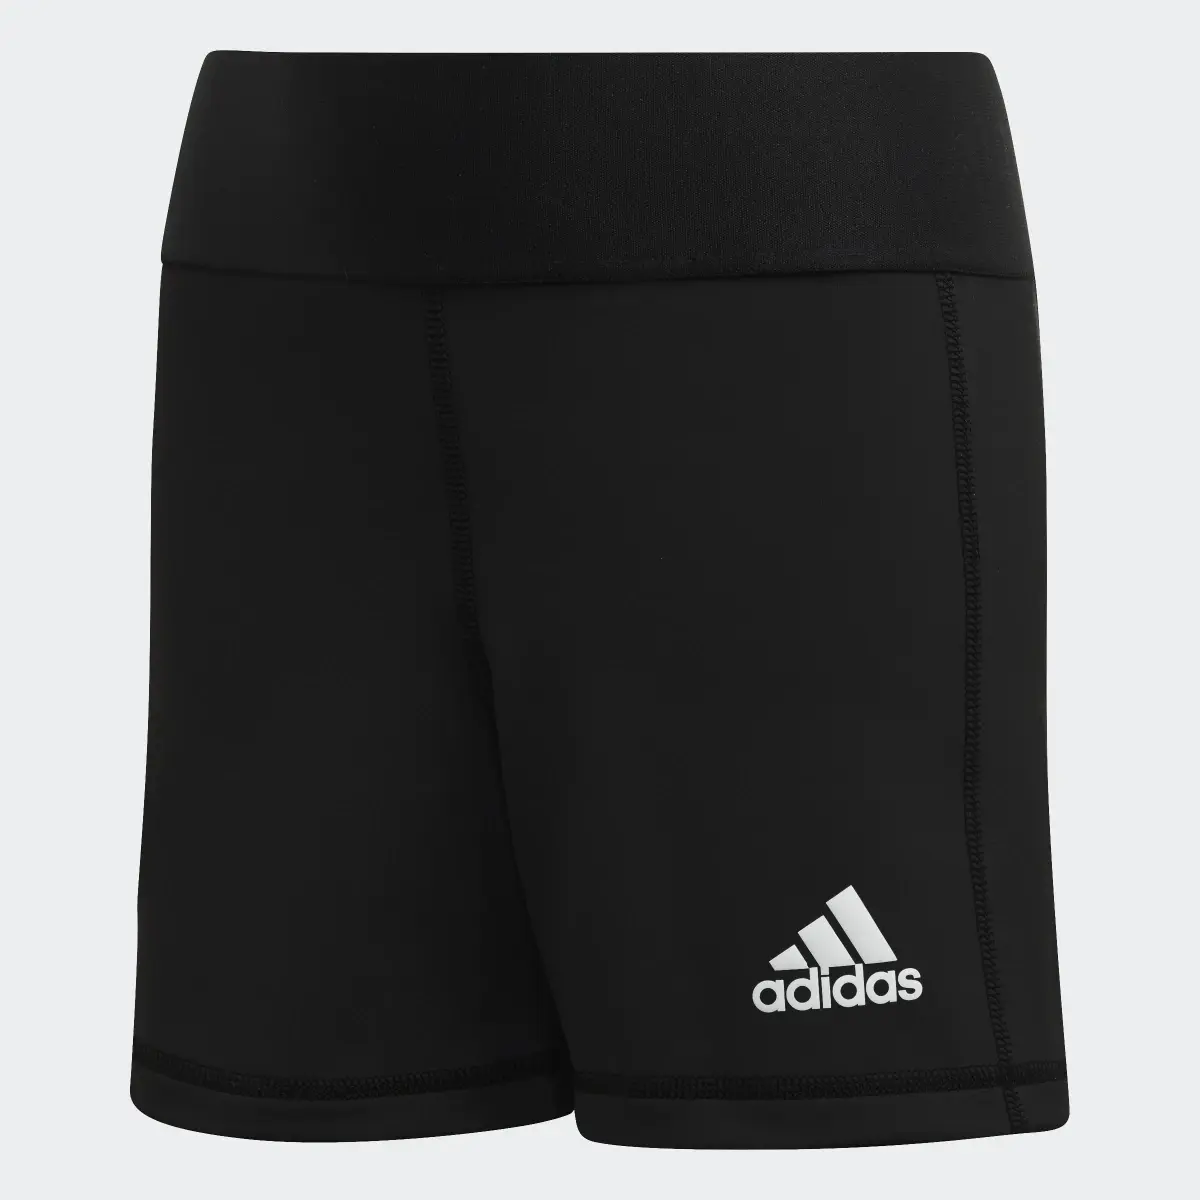 Adidas Alphaskin Volleyball Shorts. 1